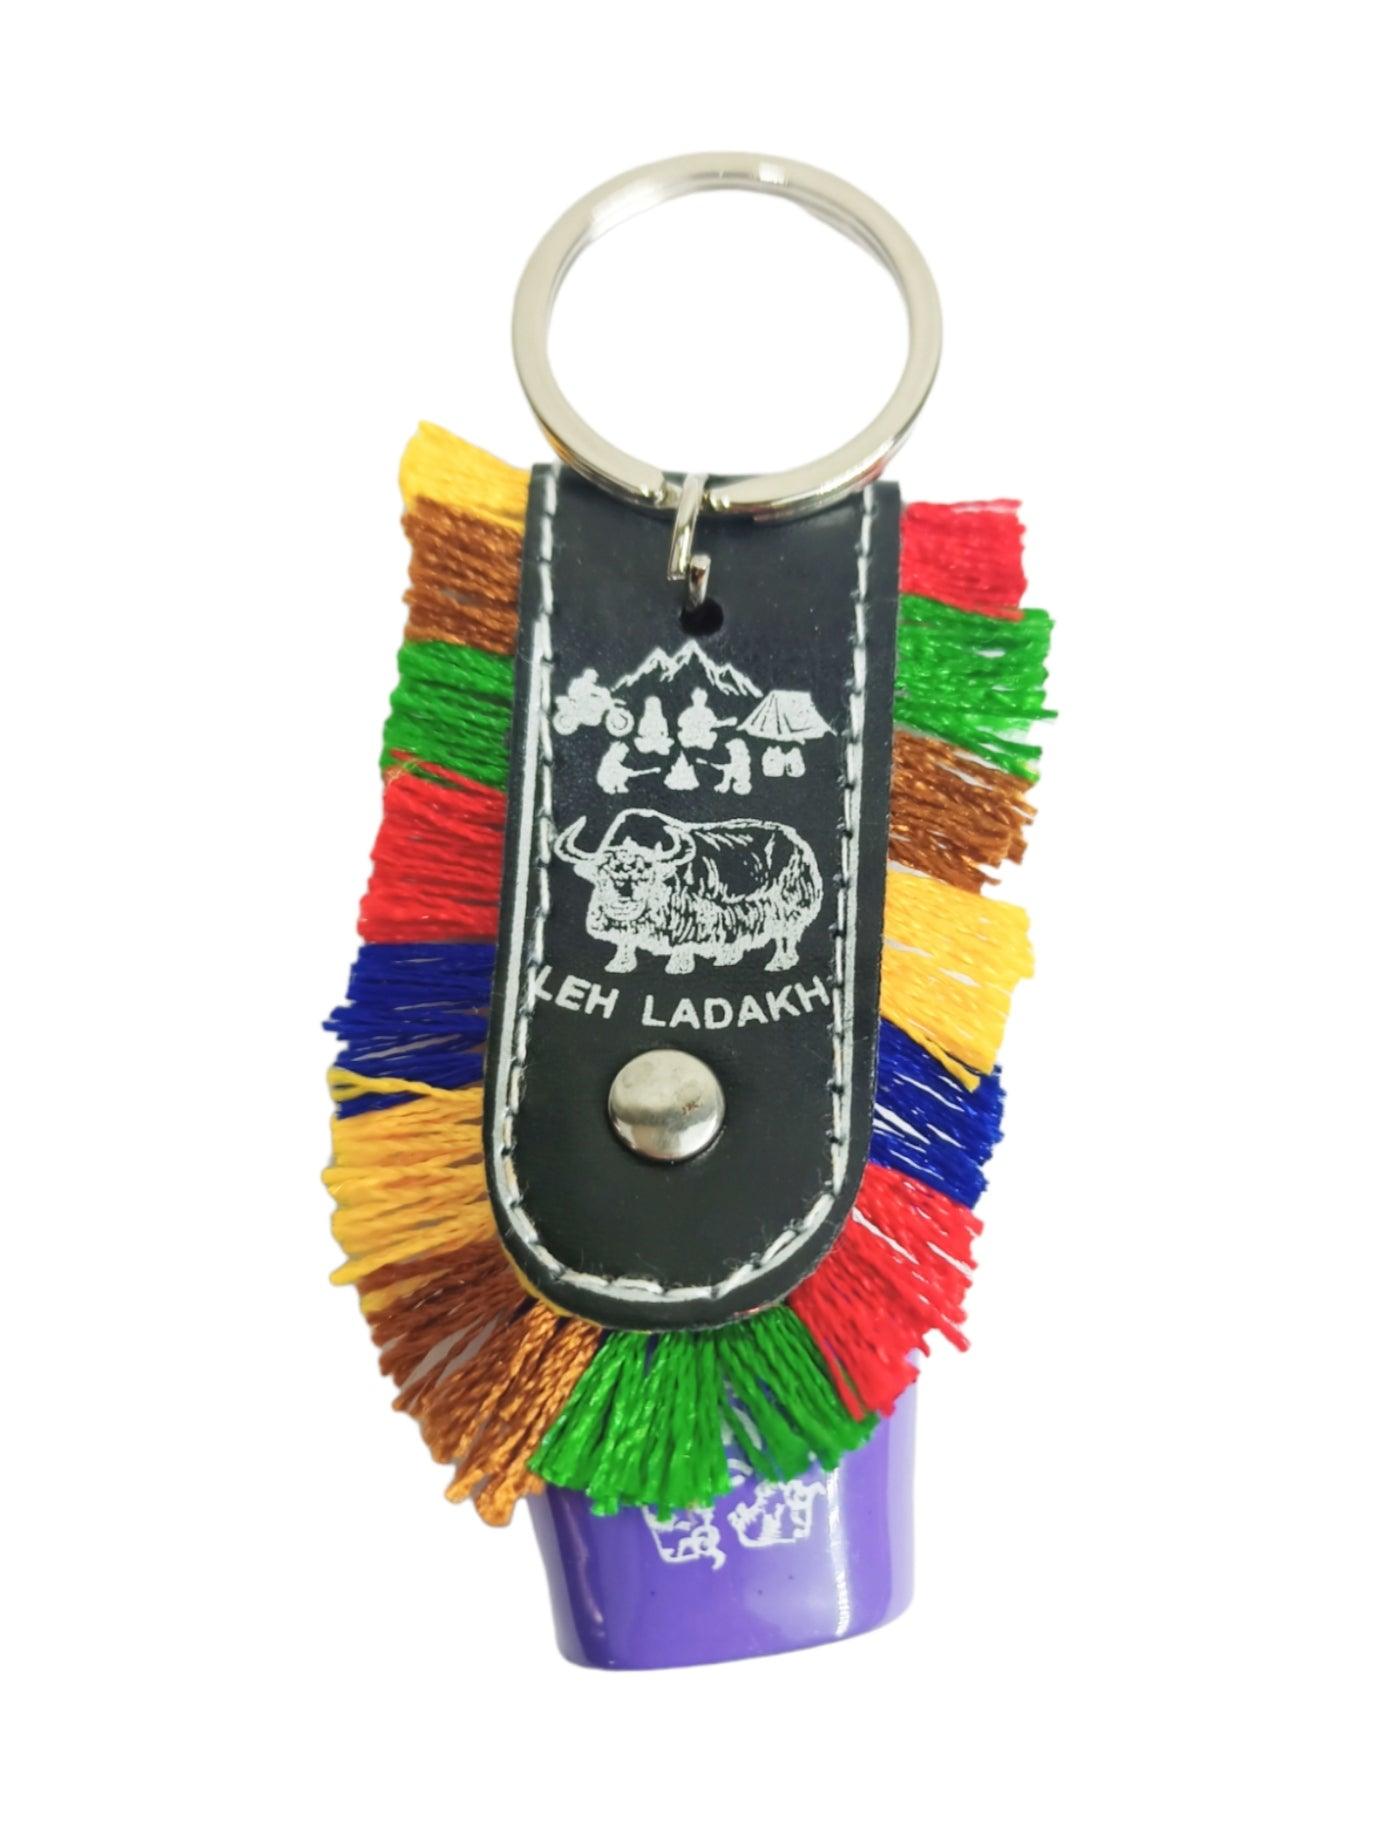 Swiss Cow Lucky Bell Keychain | Julley keychain | Ladakh Souvenirs - ZANSKAR ARTS